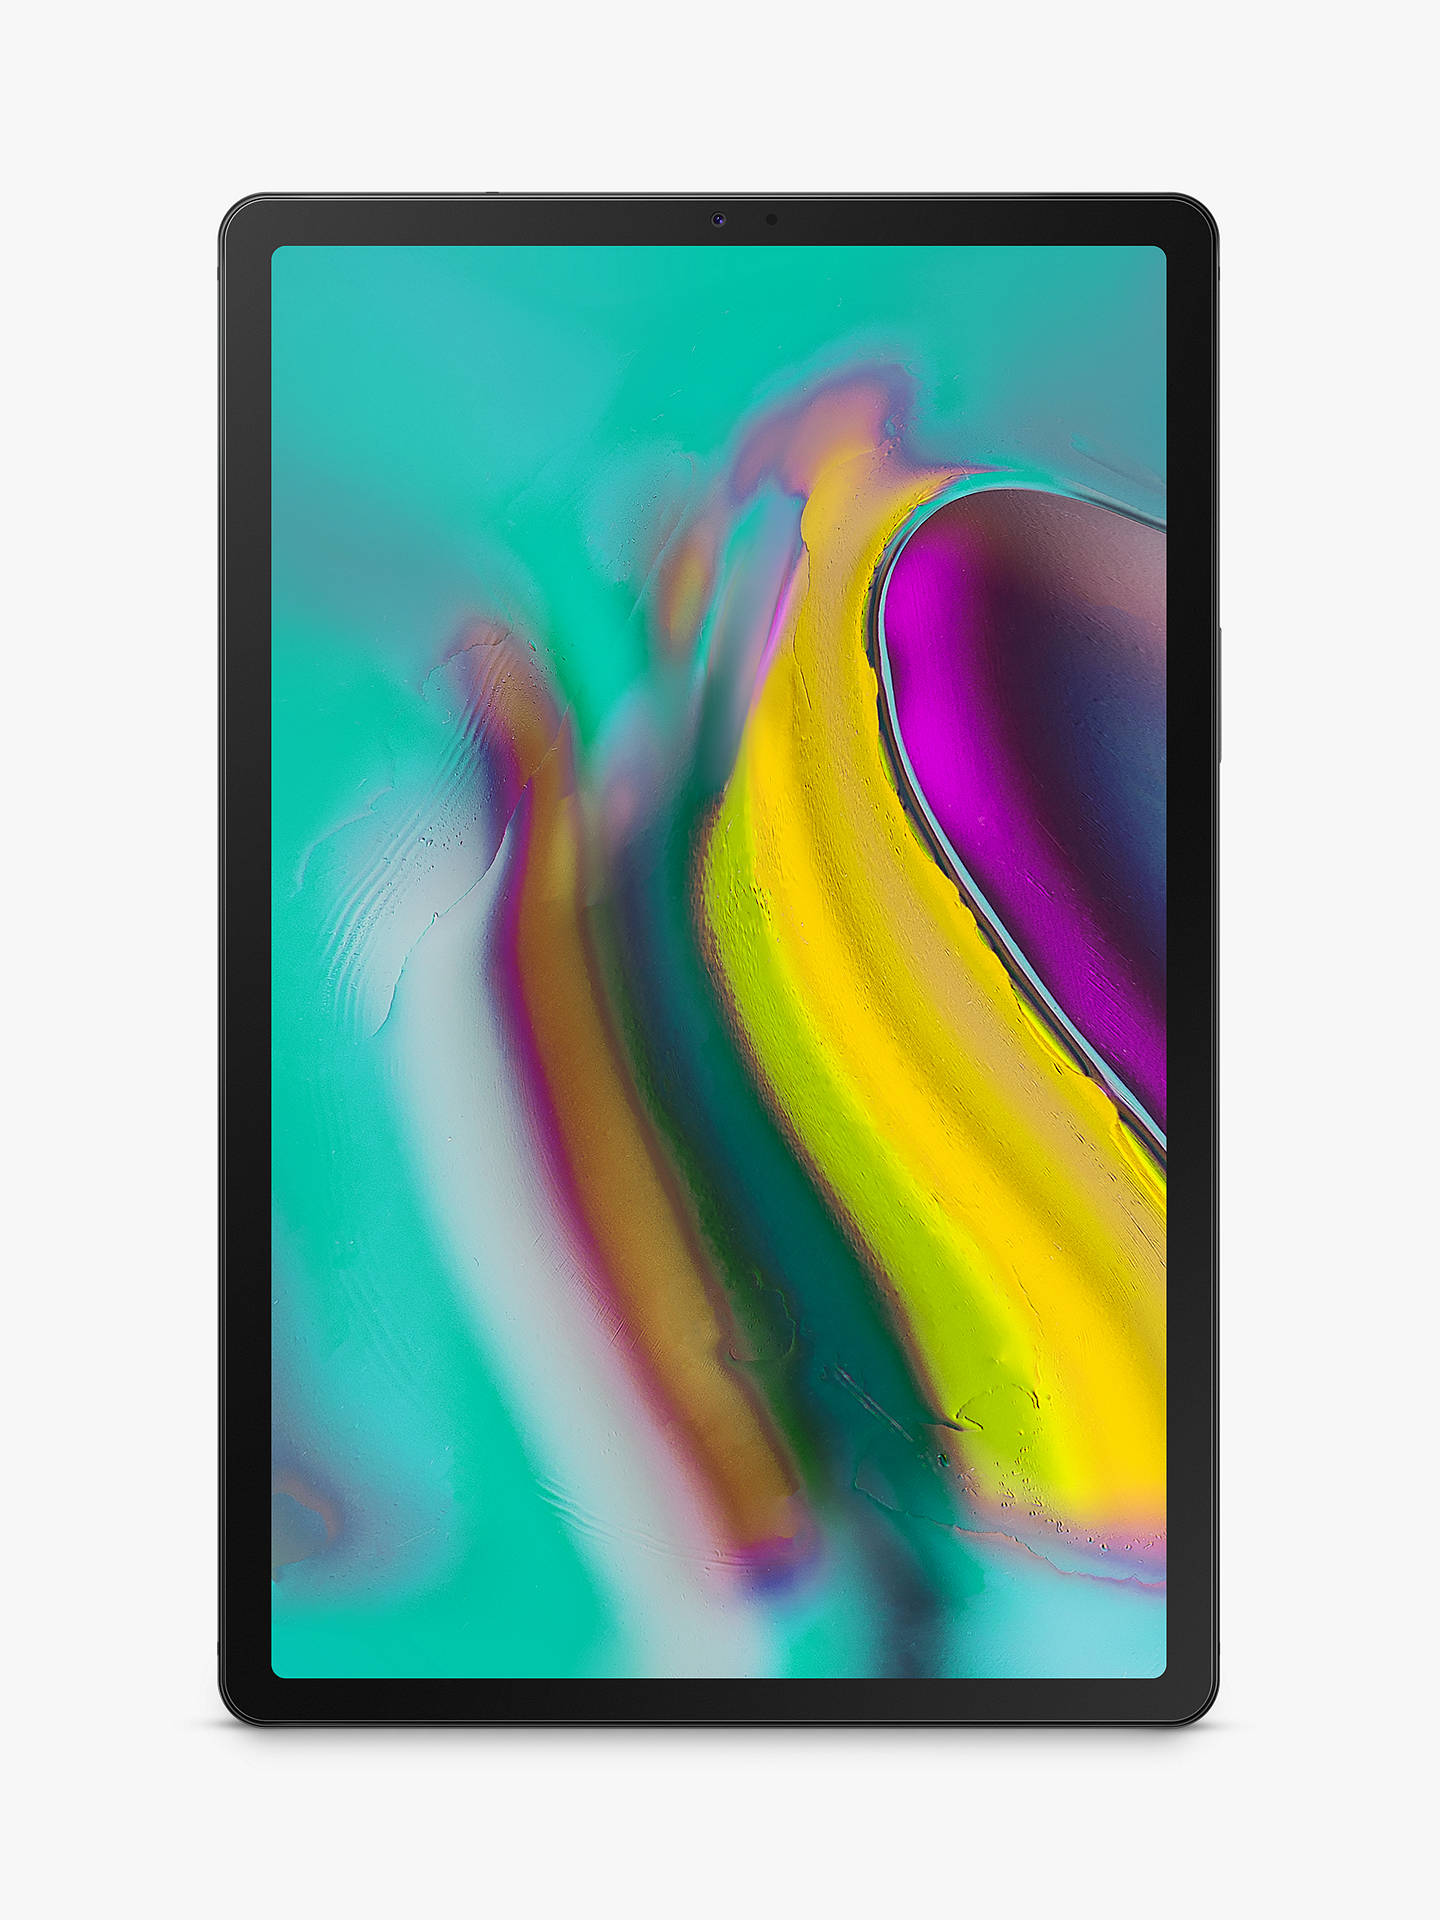 Samsung Galaxy Tab S5e Tablet, Android, 6GB RAM, 128GB, Wi-Fi, 10.5", Black